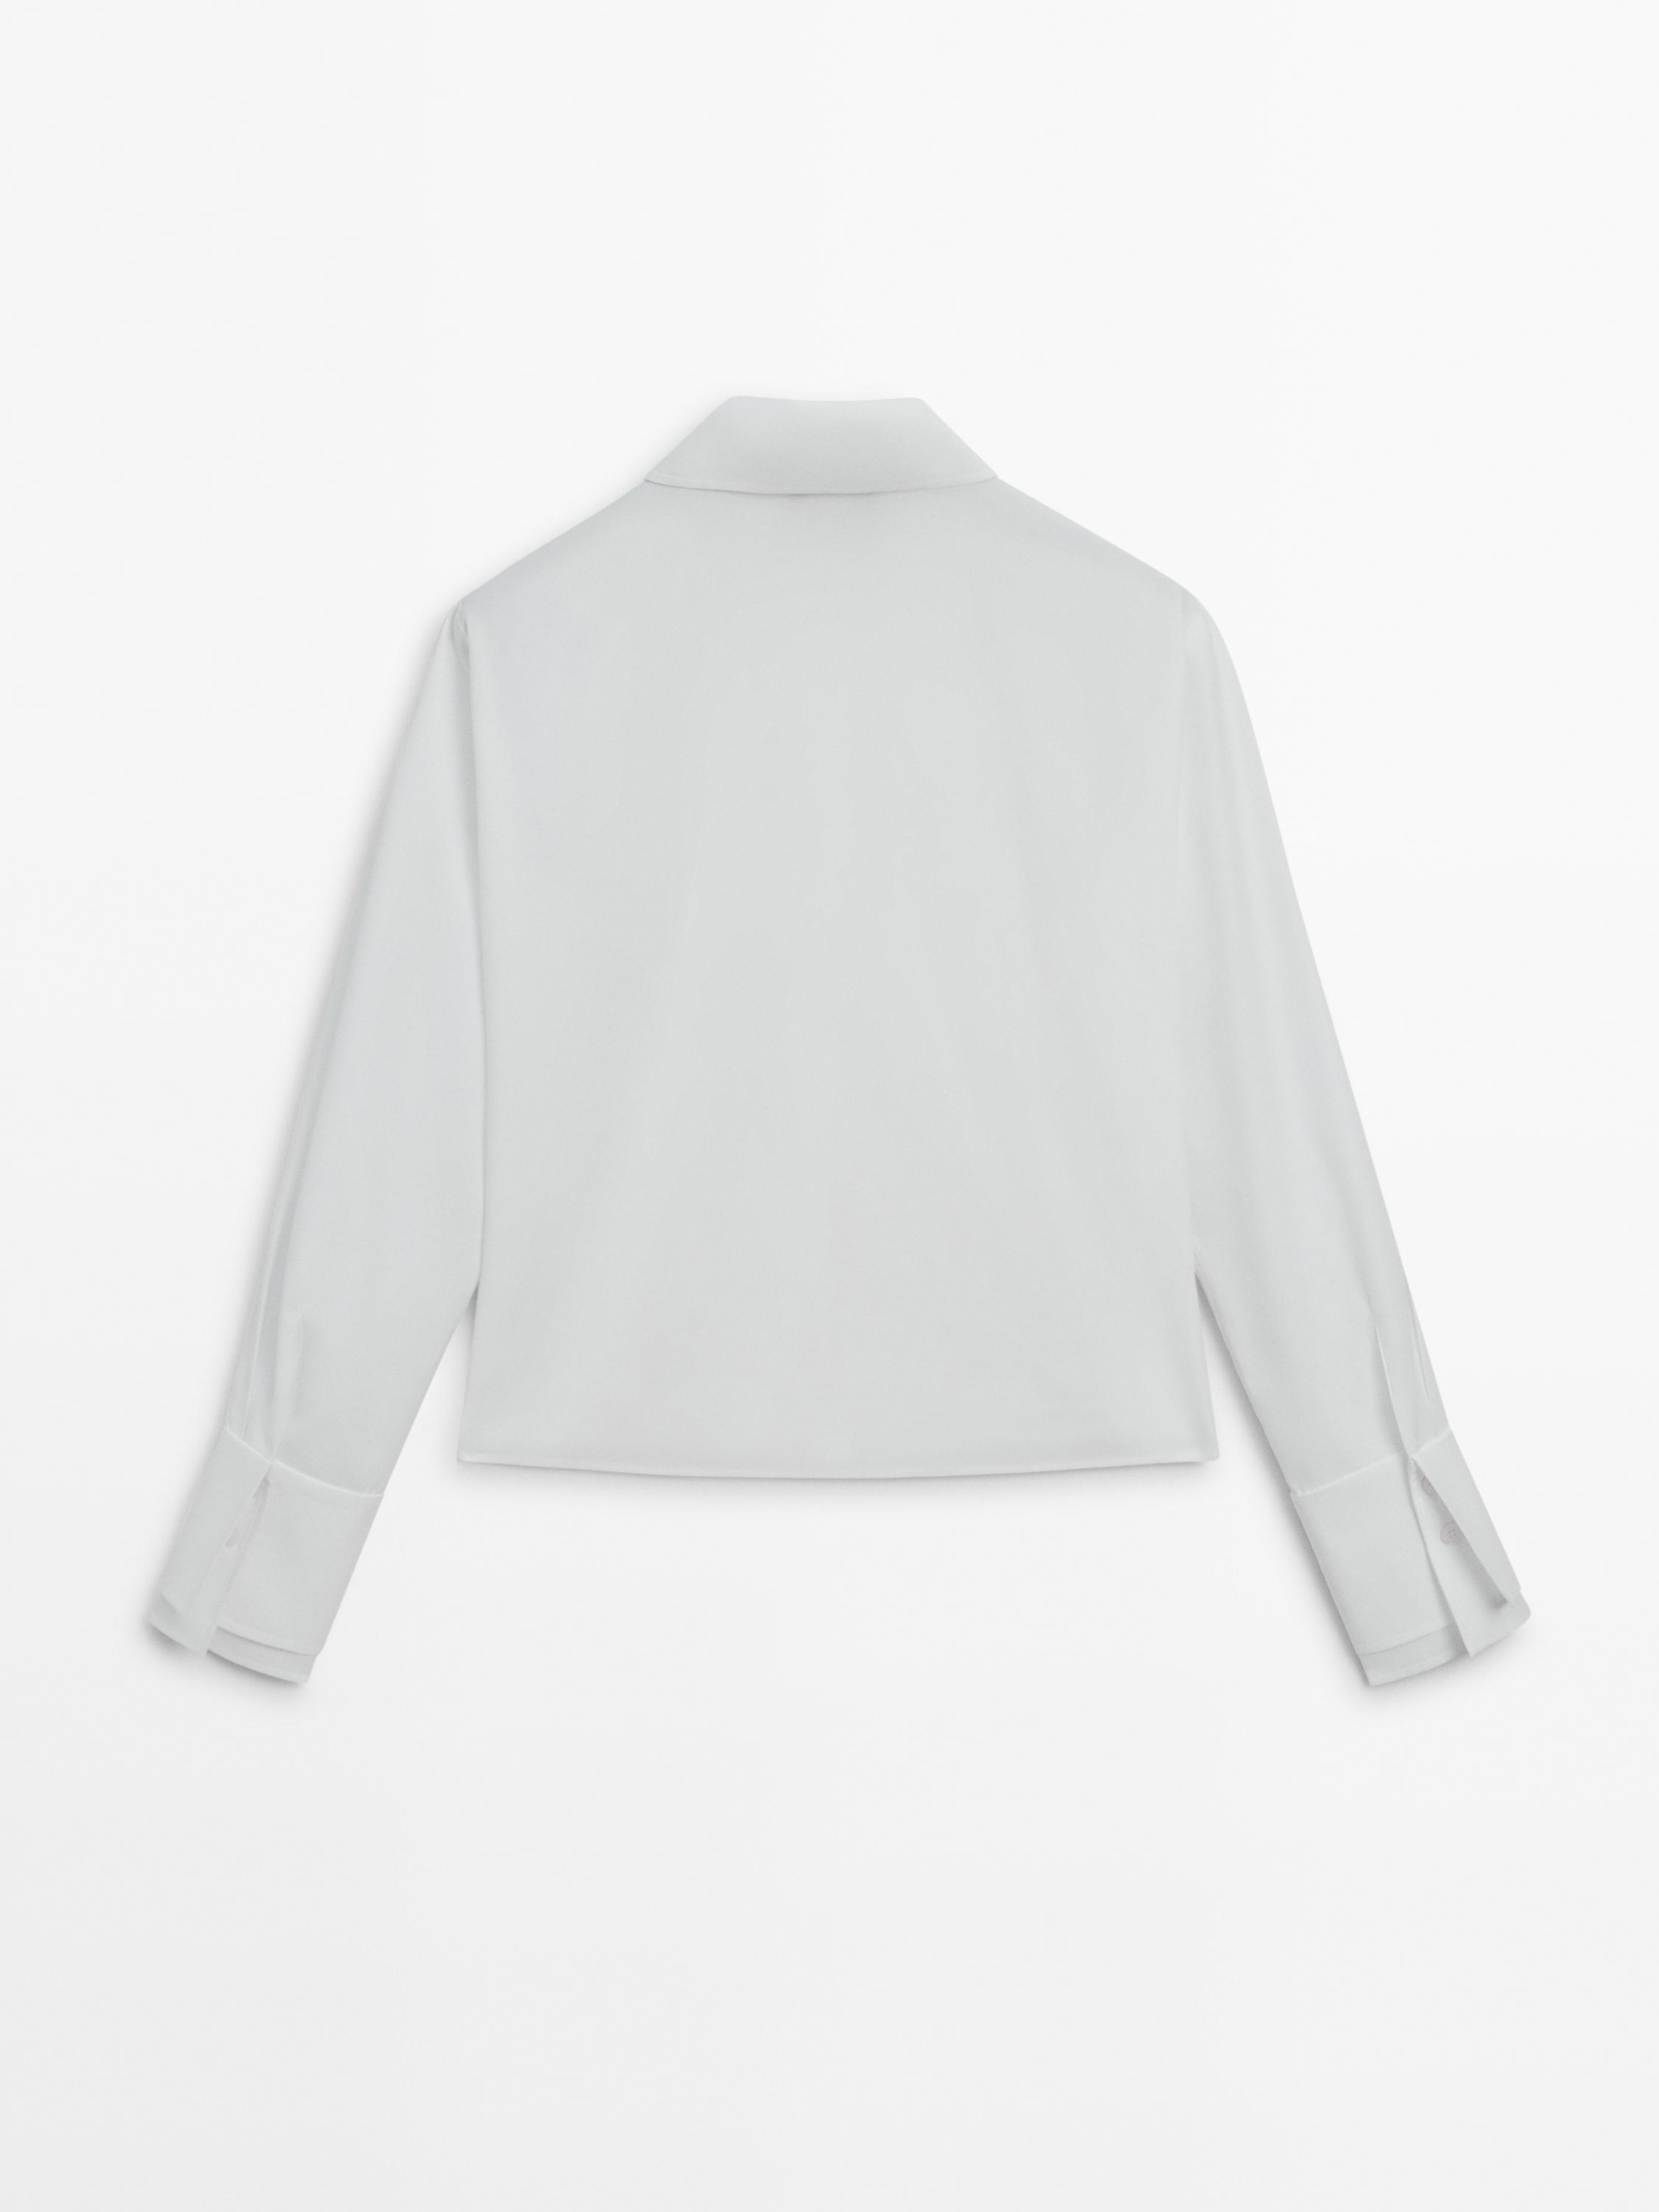 Cotton shirt with double cuffs - Studio - White | ZARA United States